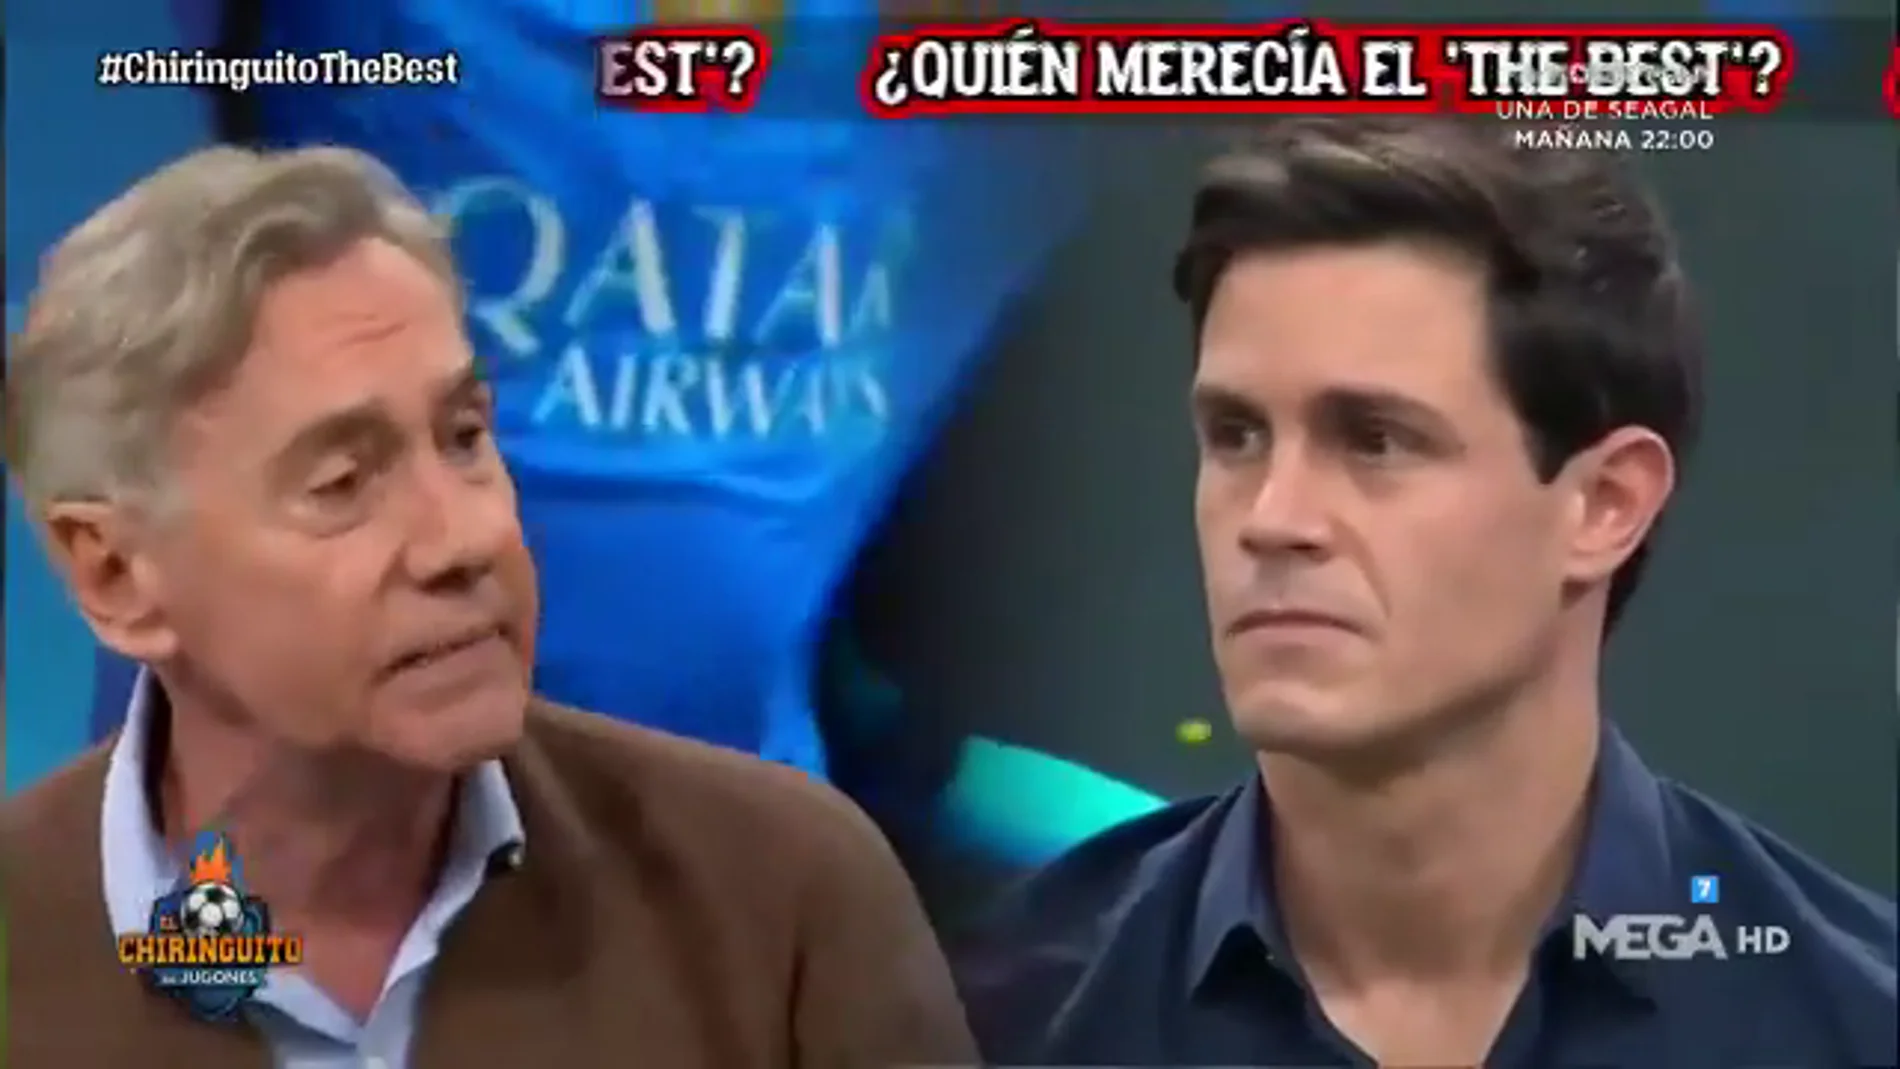 Brutal cara a cara entre Rafa Almansa y Edu Aguirre: "No puedes menospreciar a Messi para alabar a Cristiano"